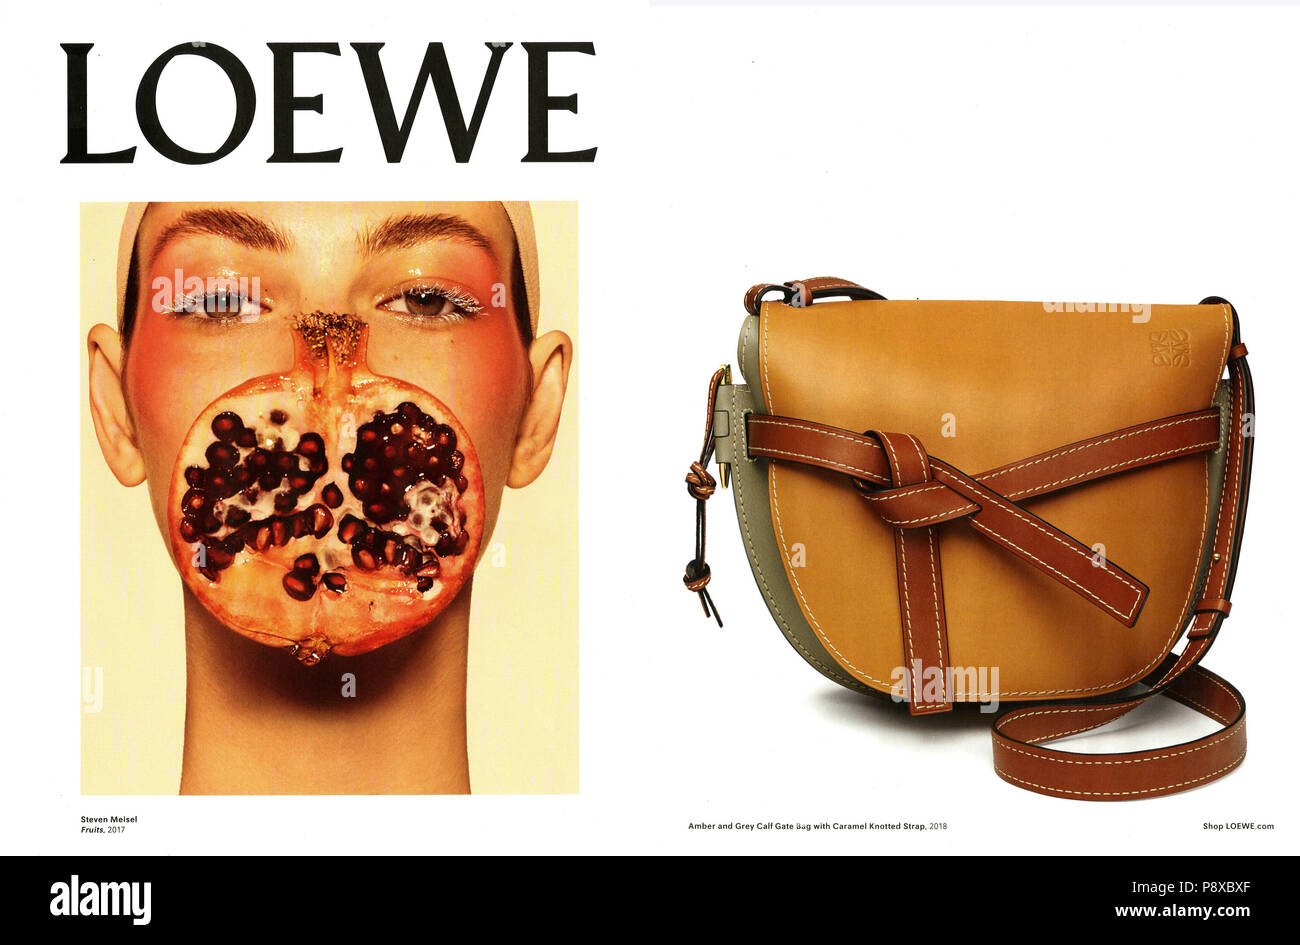 2010s UK Loewe Magazine Advert Stock Photo